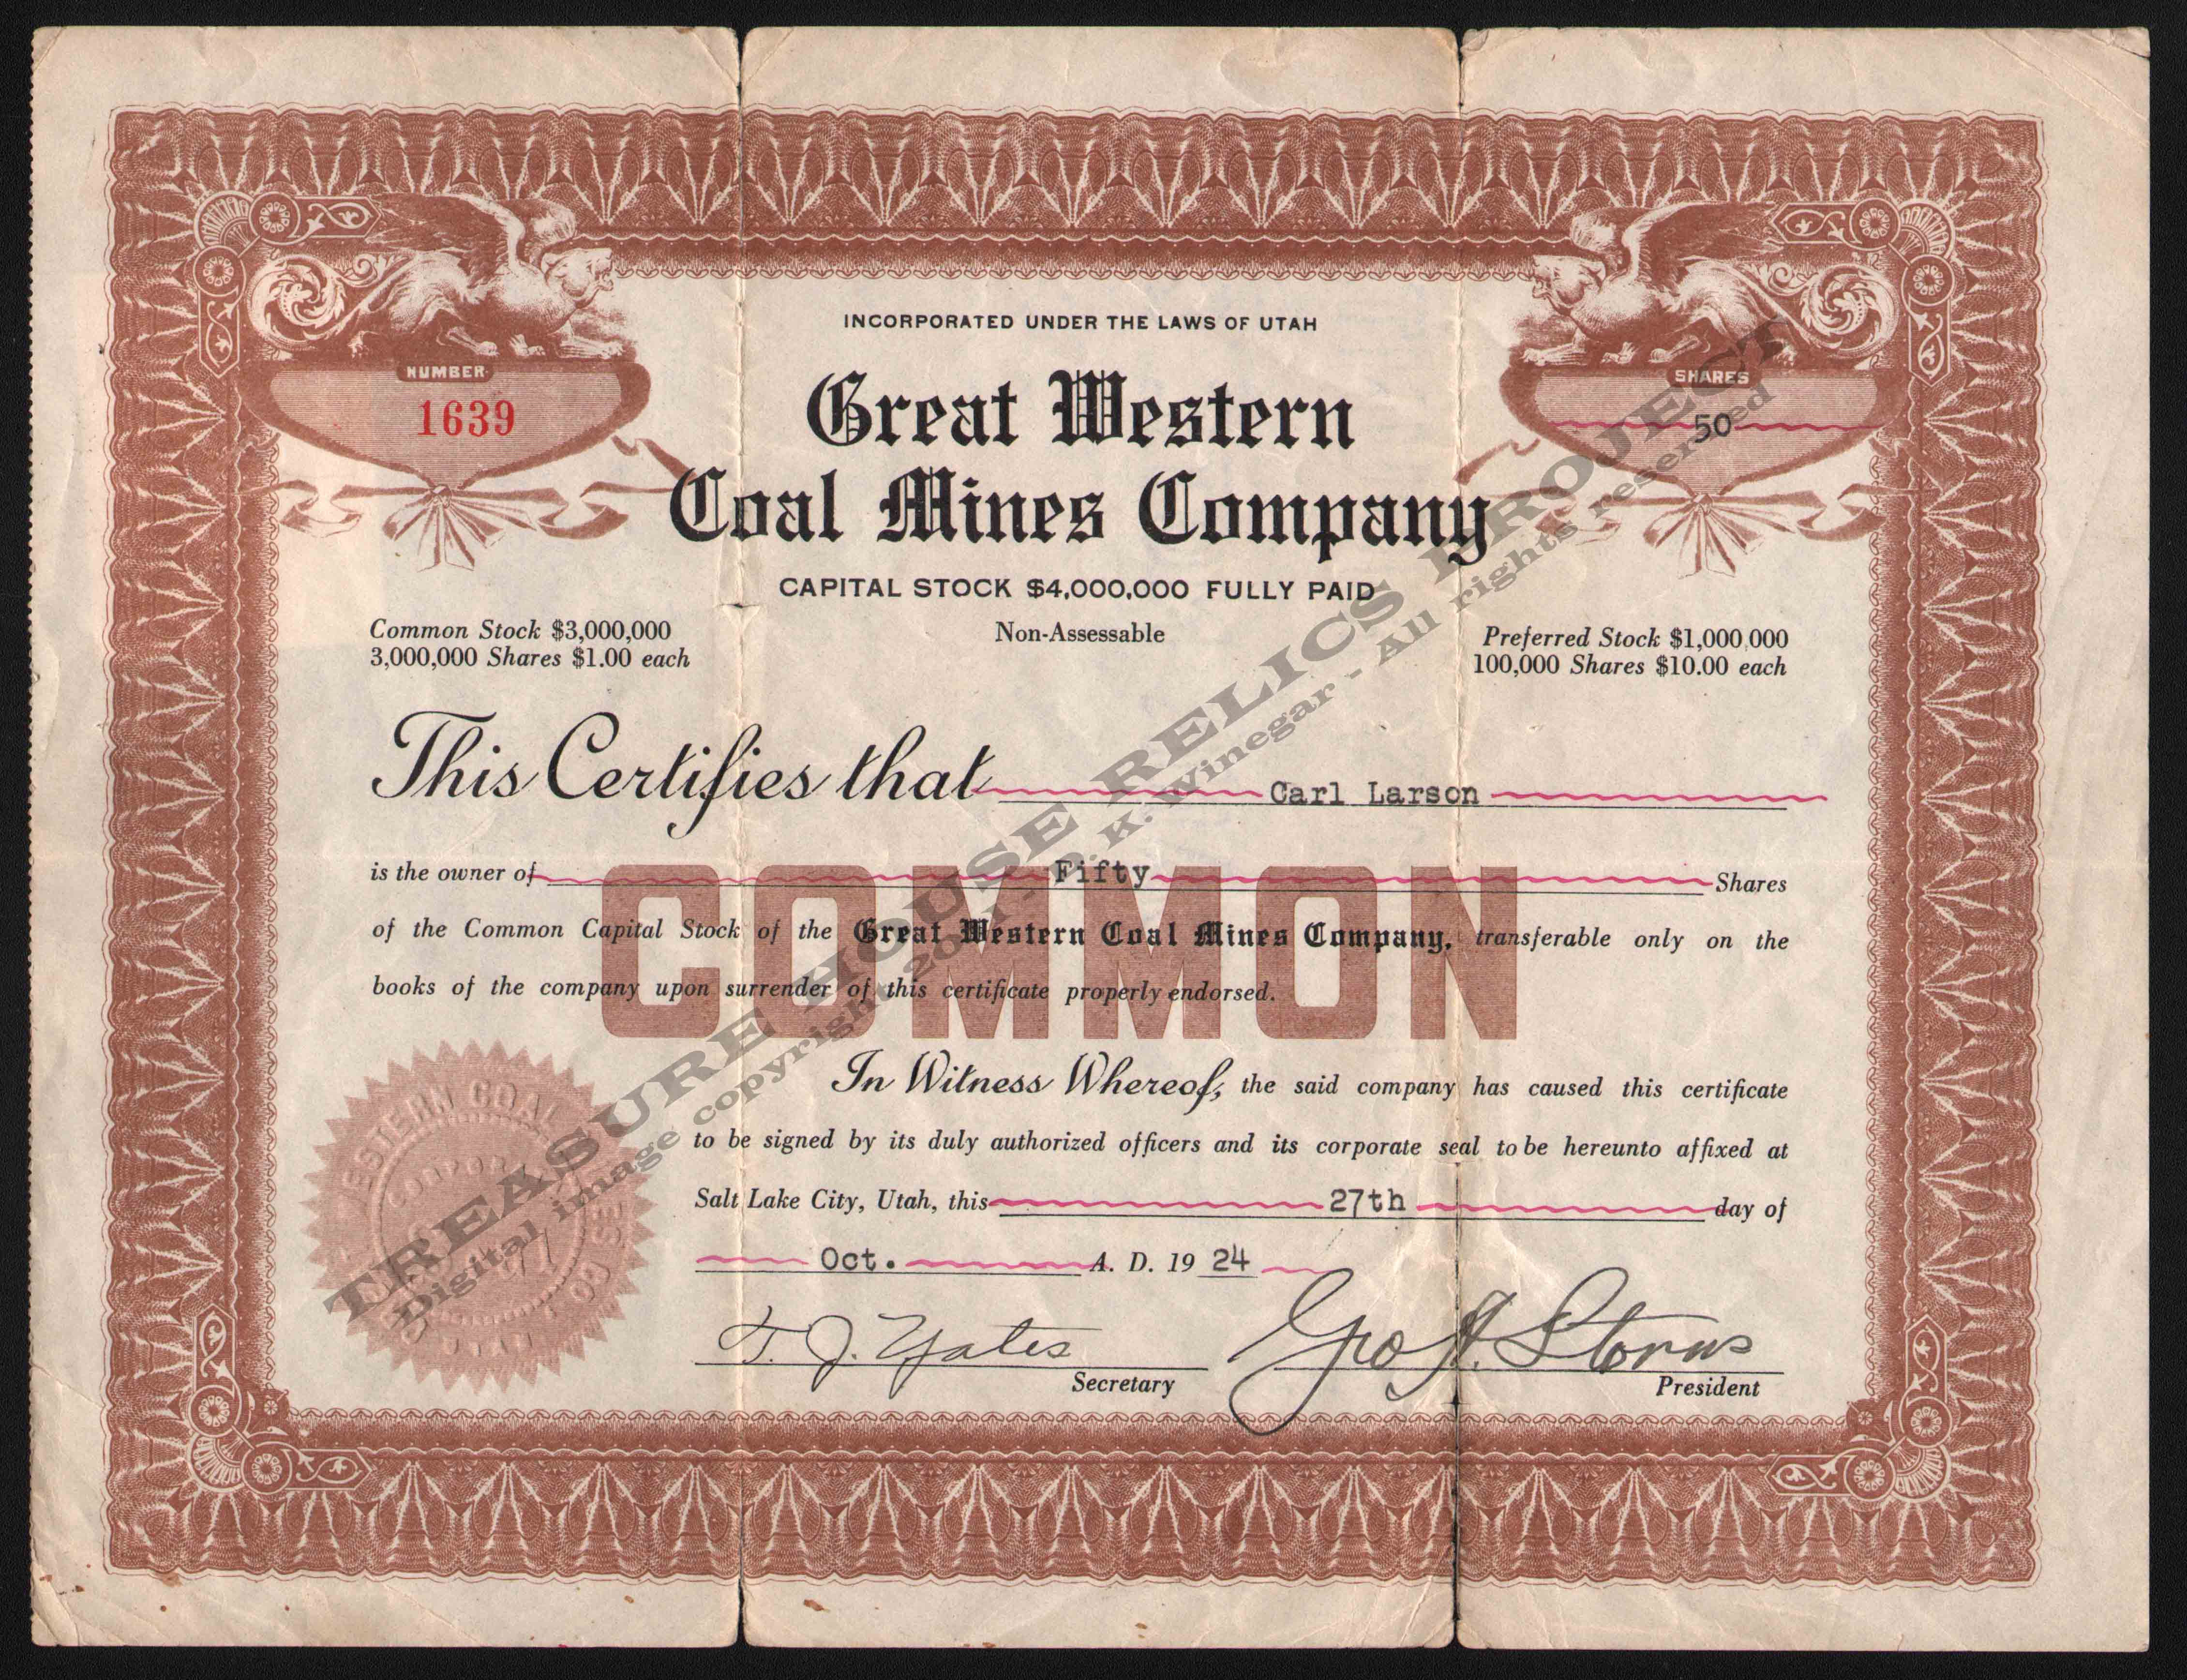 GREAT_WESTERN_COAL_MINES_COMPANY_1639_1924_400_EMBOSS.jpg